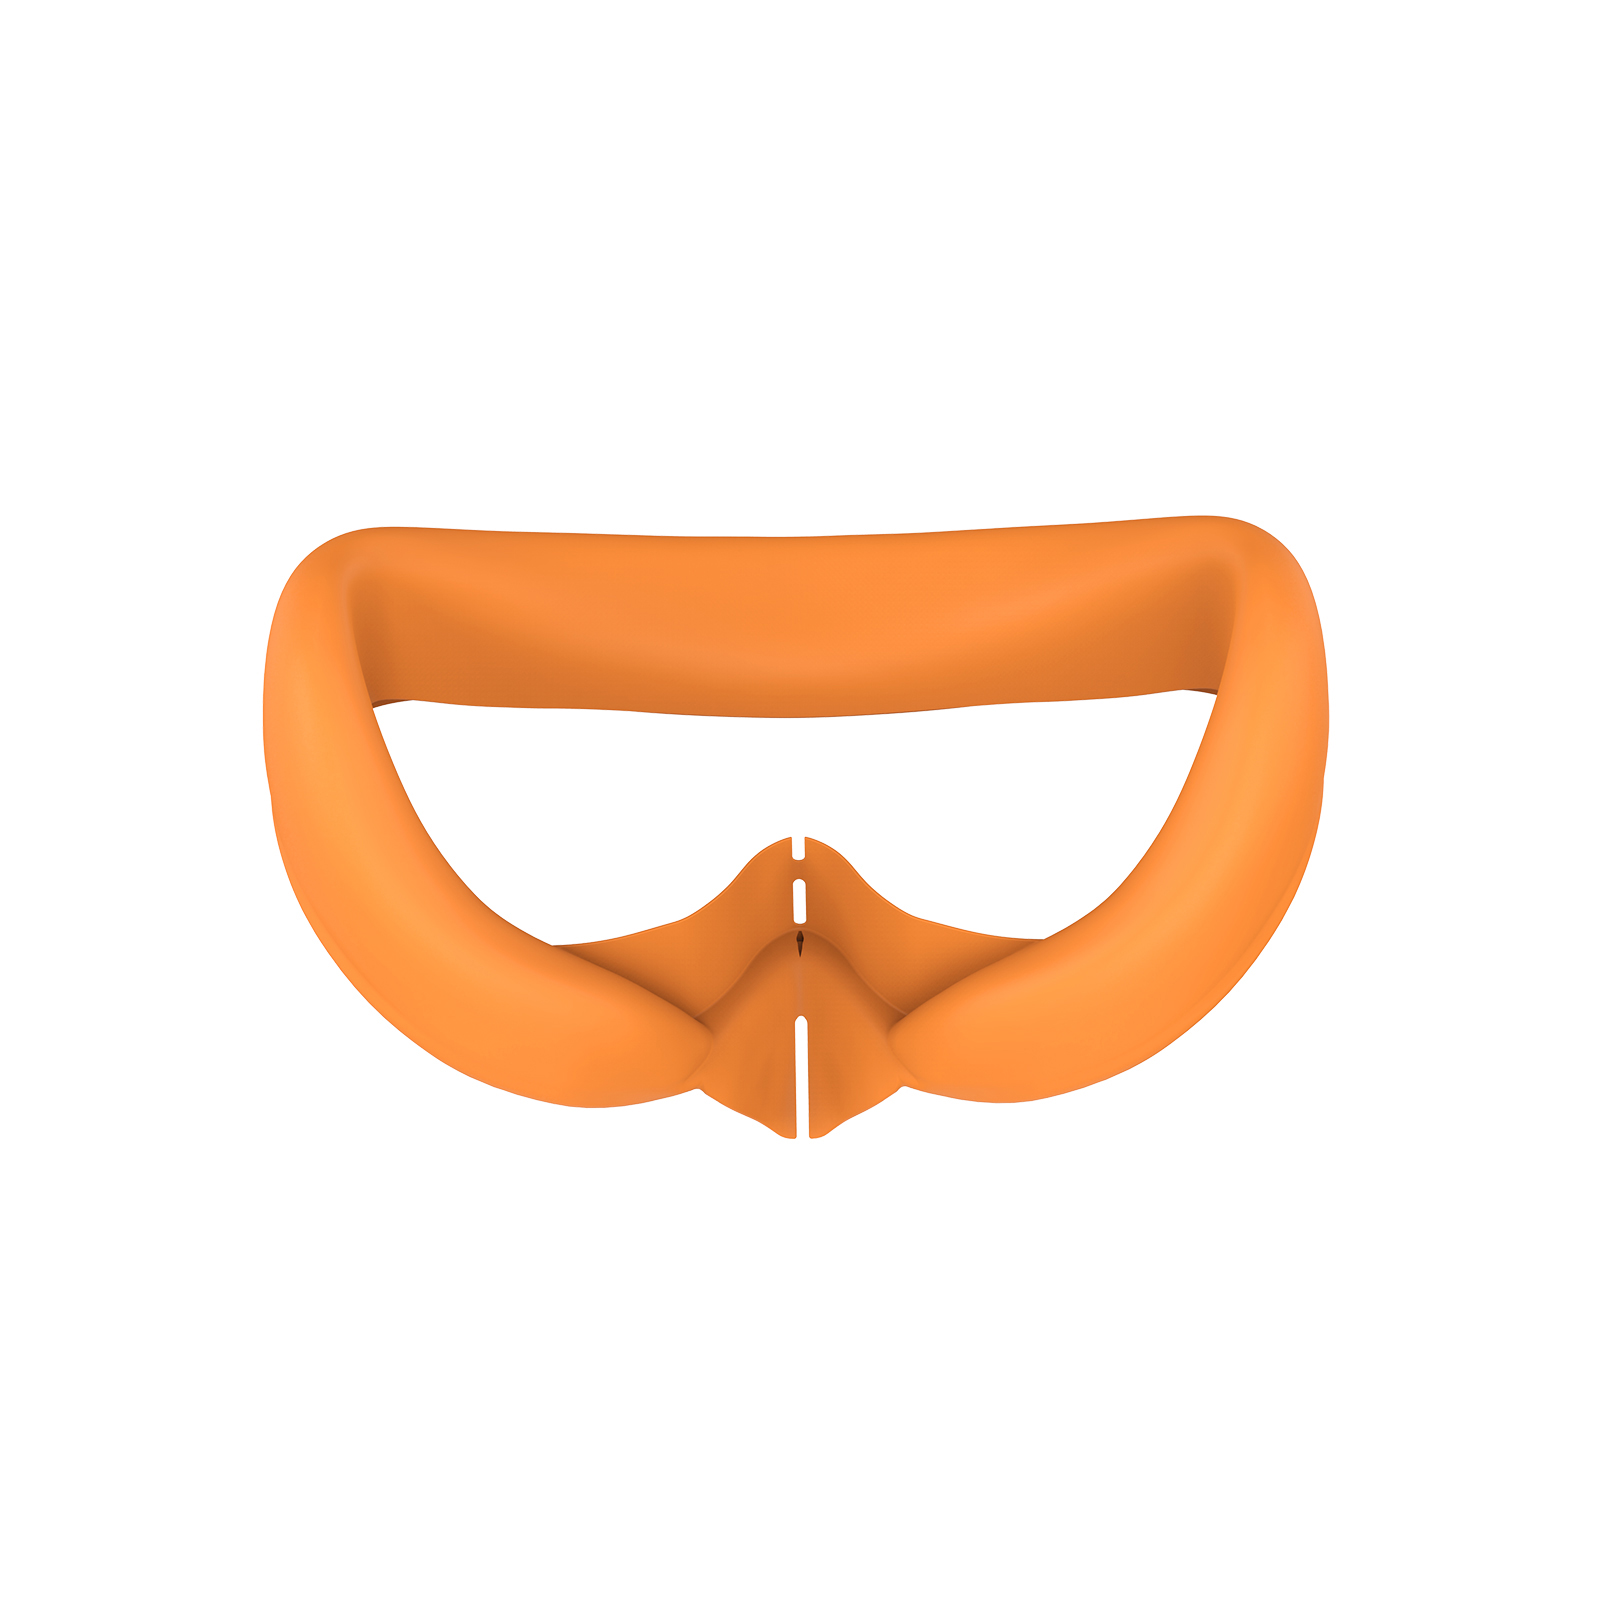 Anti-sweat Mask Cover Case Replacement Silicone Eye Cover Compatible For Pico 4 Vr Glasses Accessories orange